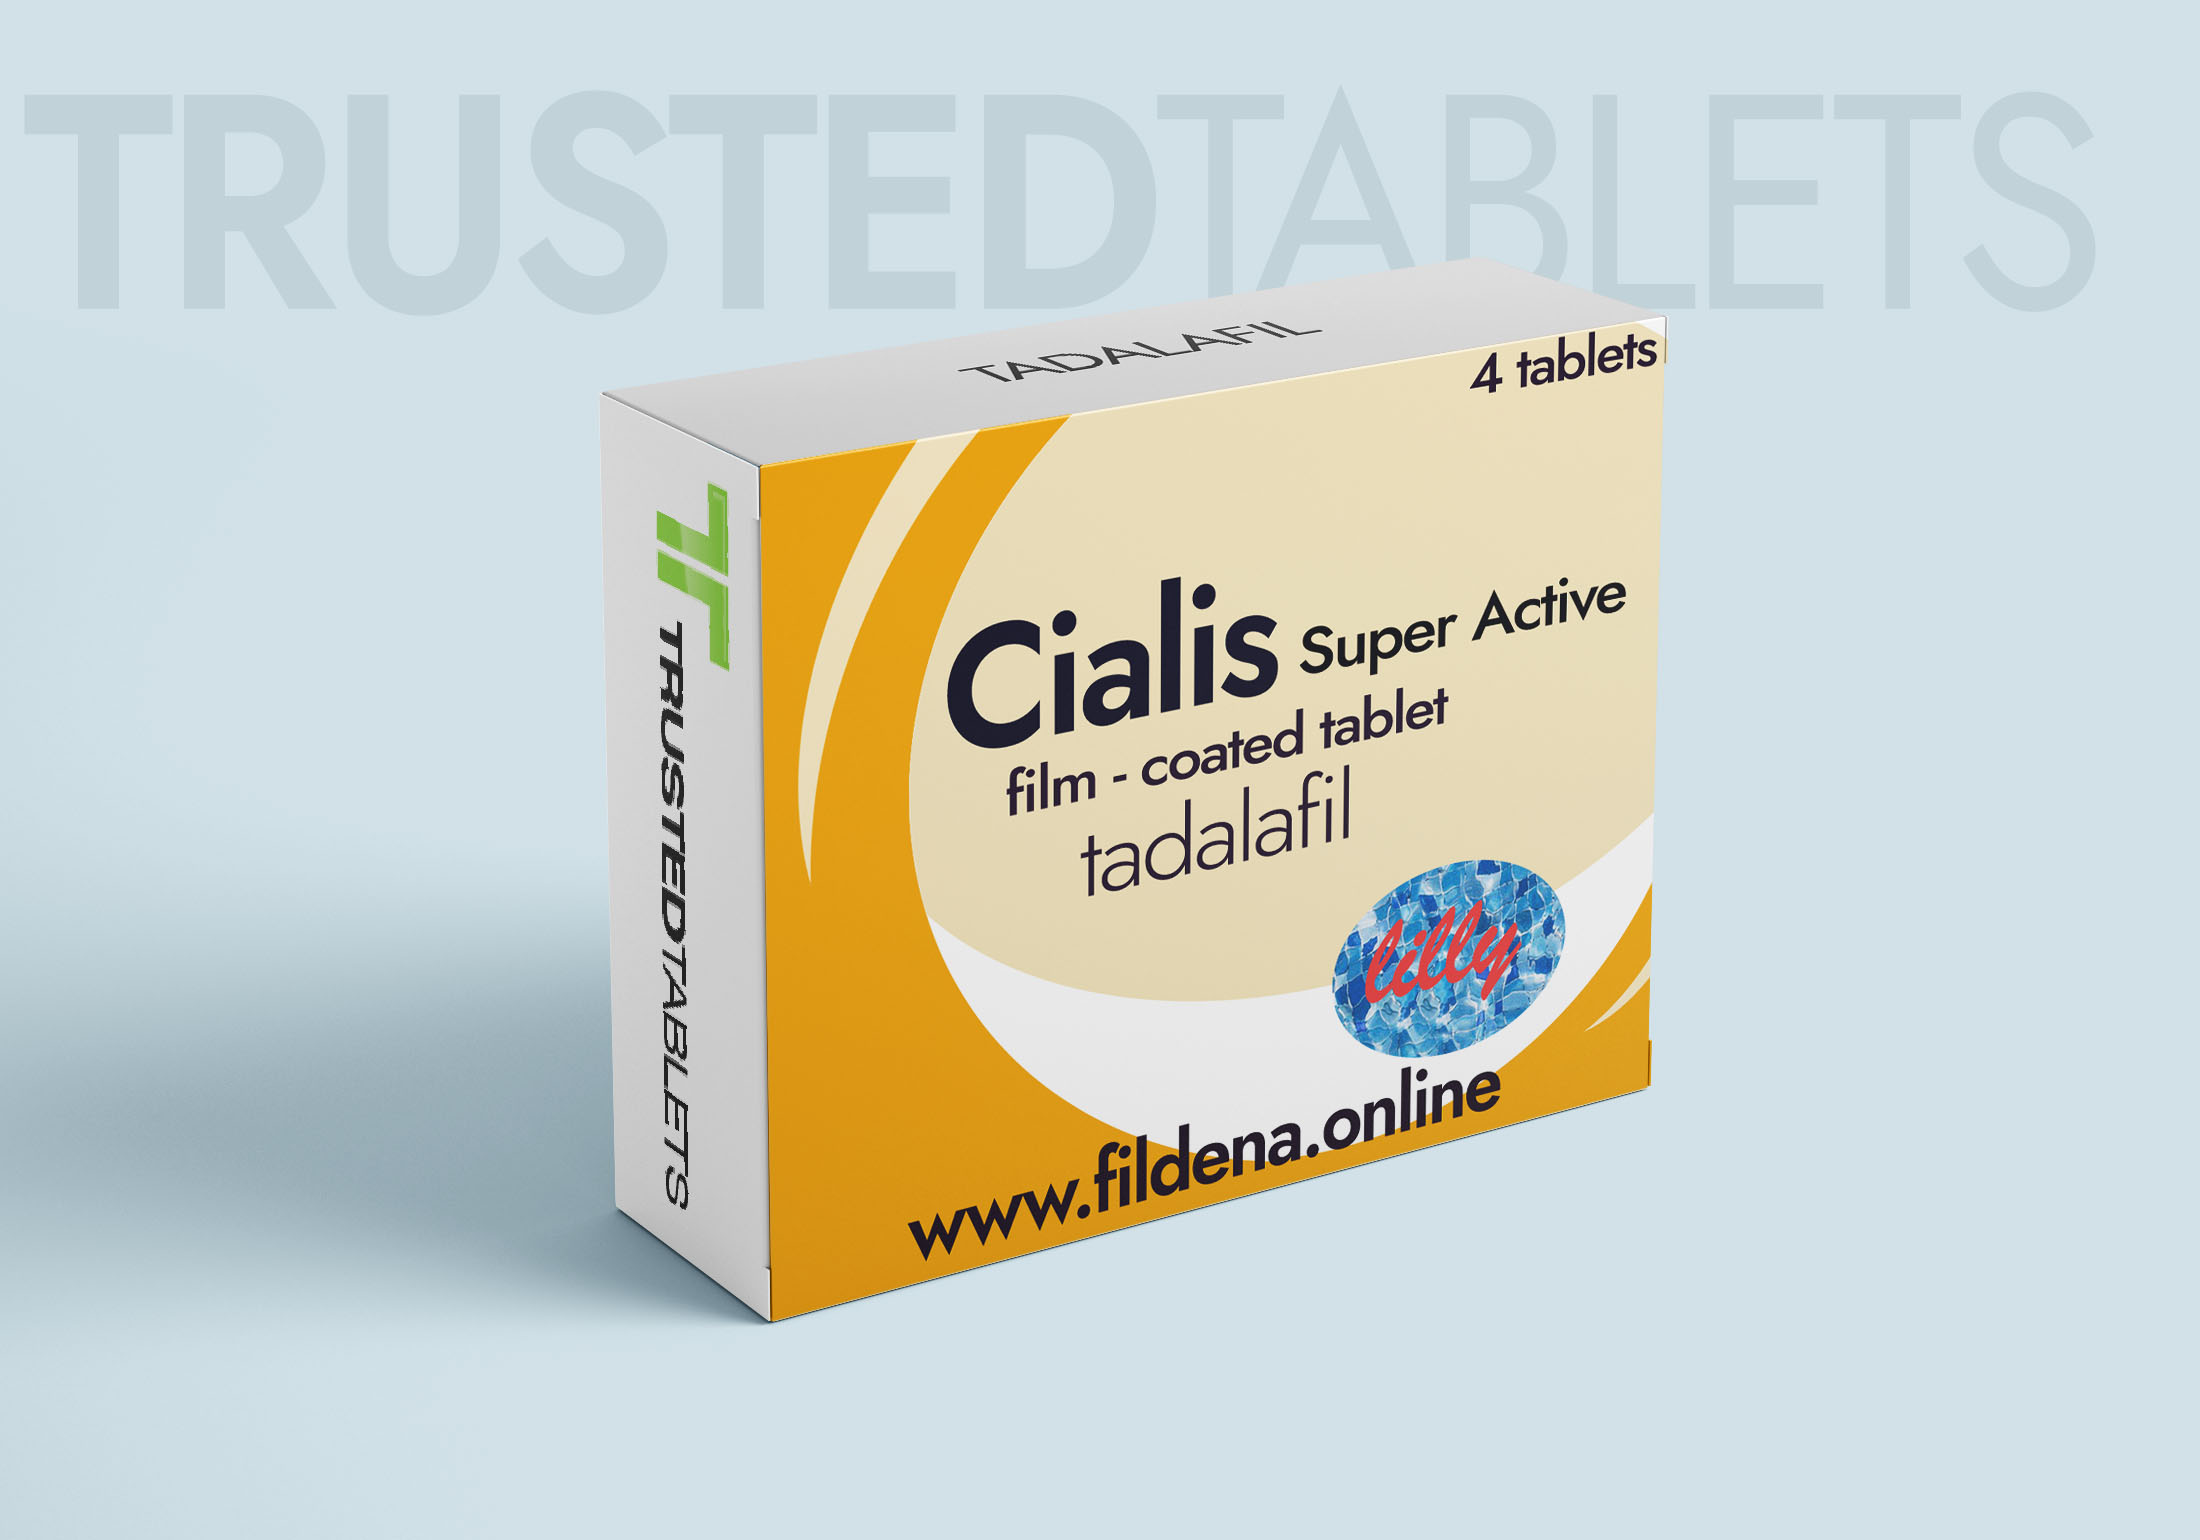 Cialis Super Active TrustedTablets